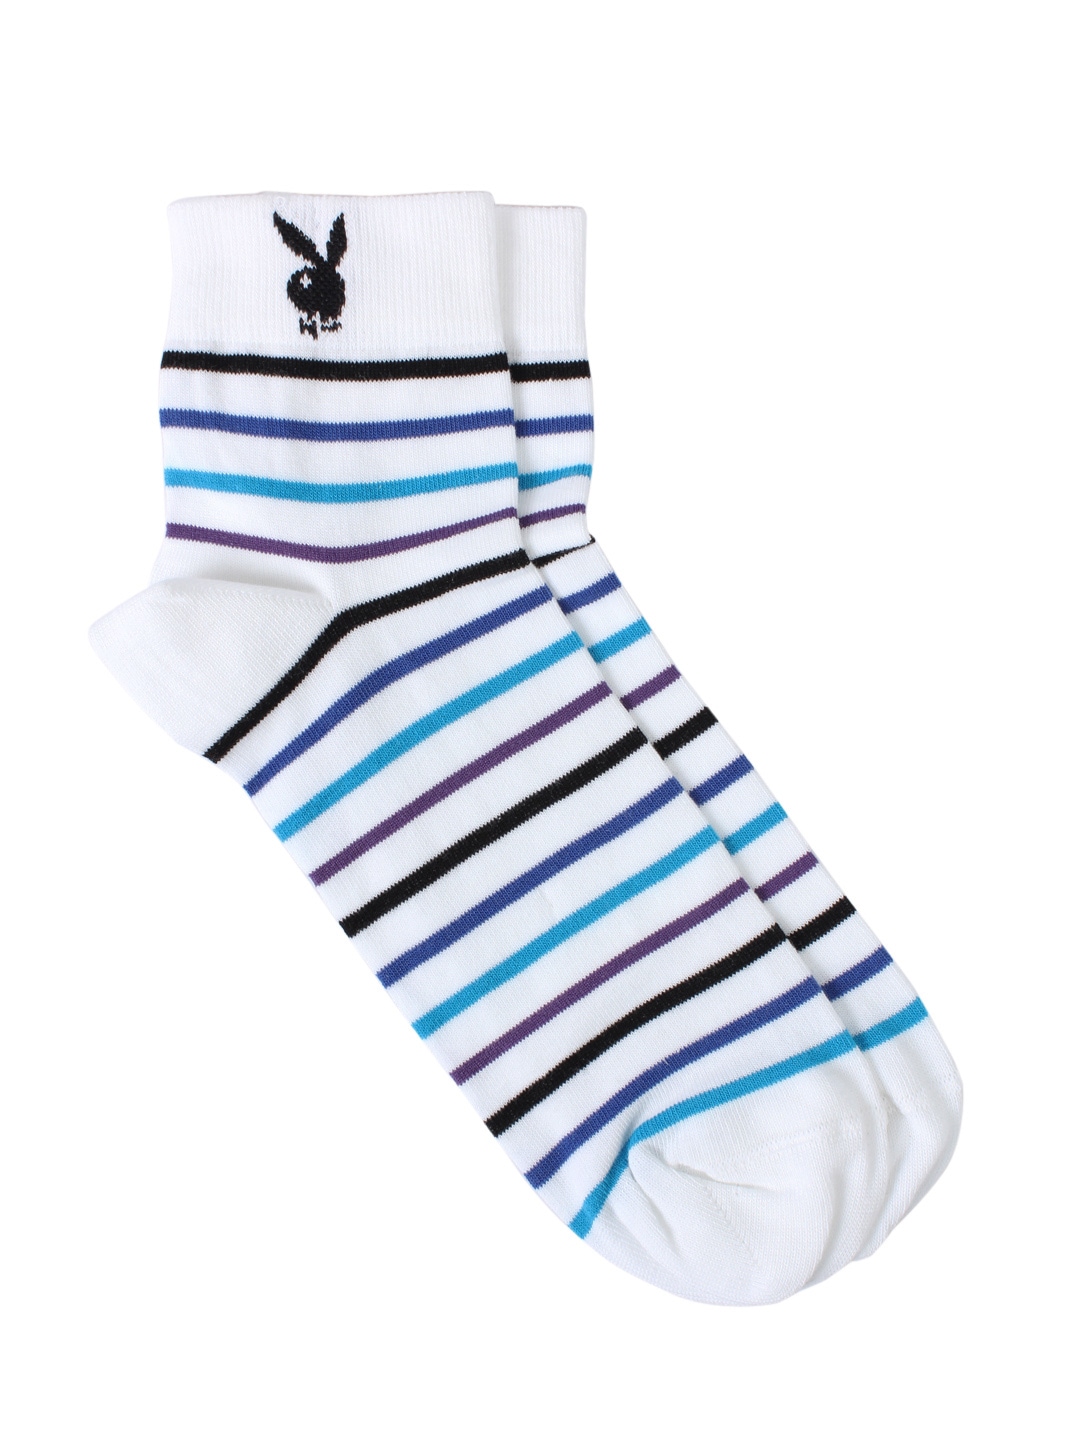 Playboy Men White  Striped Socks